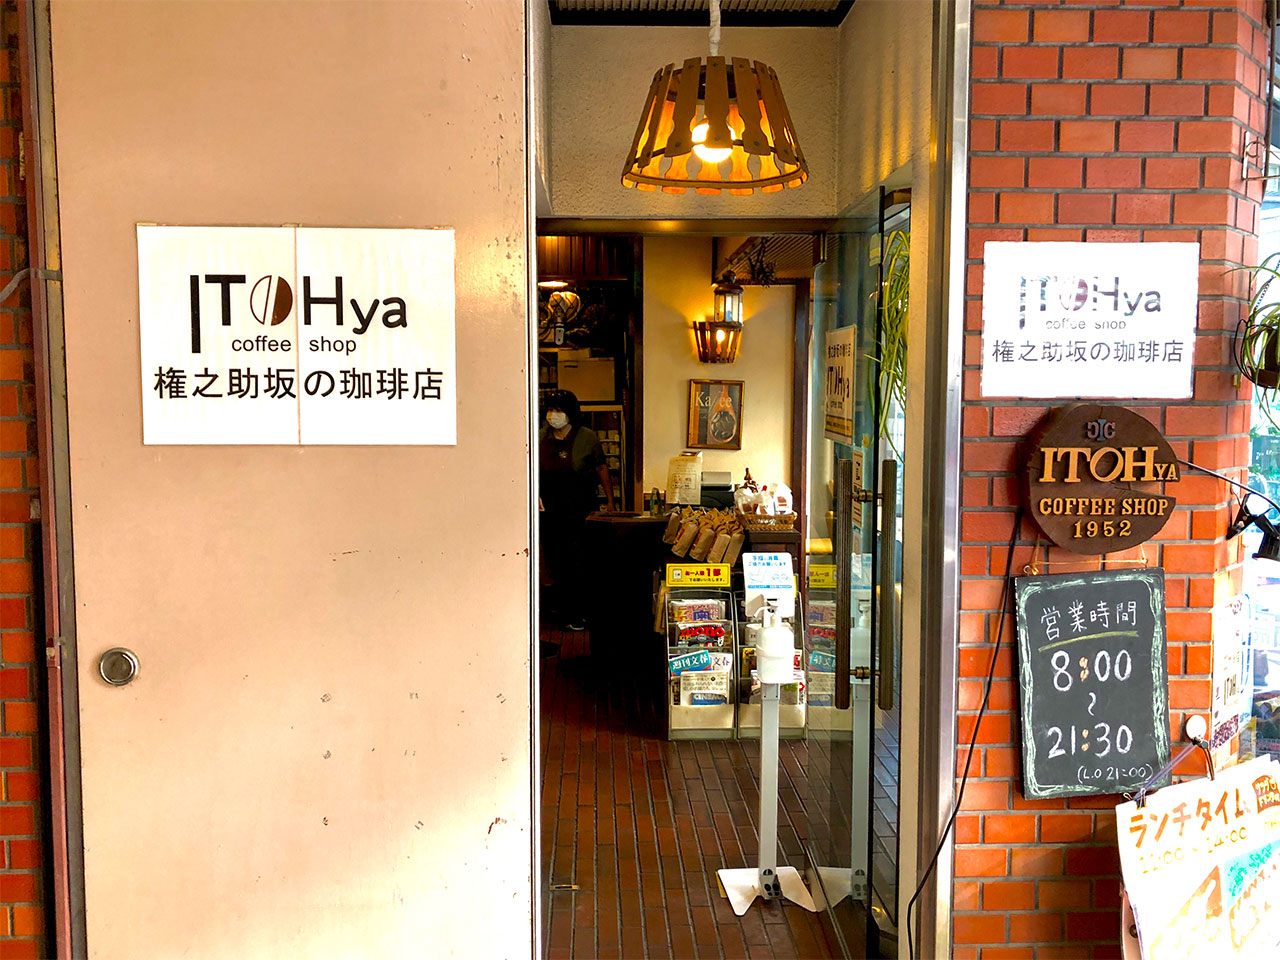 ITOHya coffee shop (イトーヤ コーヒー ショップ)